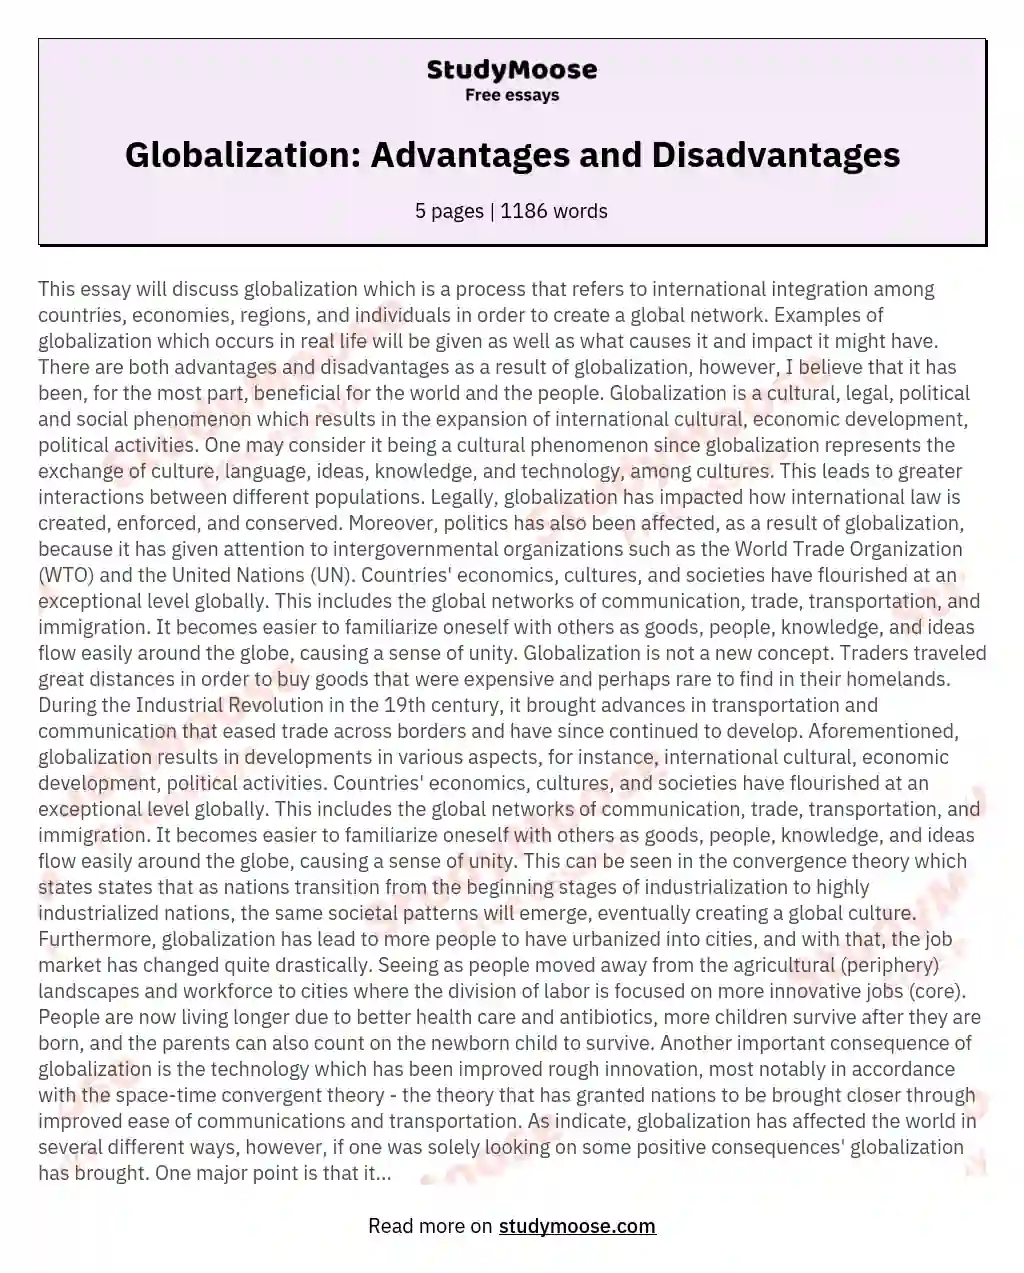 Globalization: Advantages and Disadvantages essay